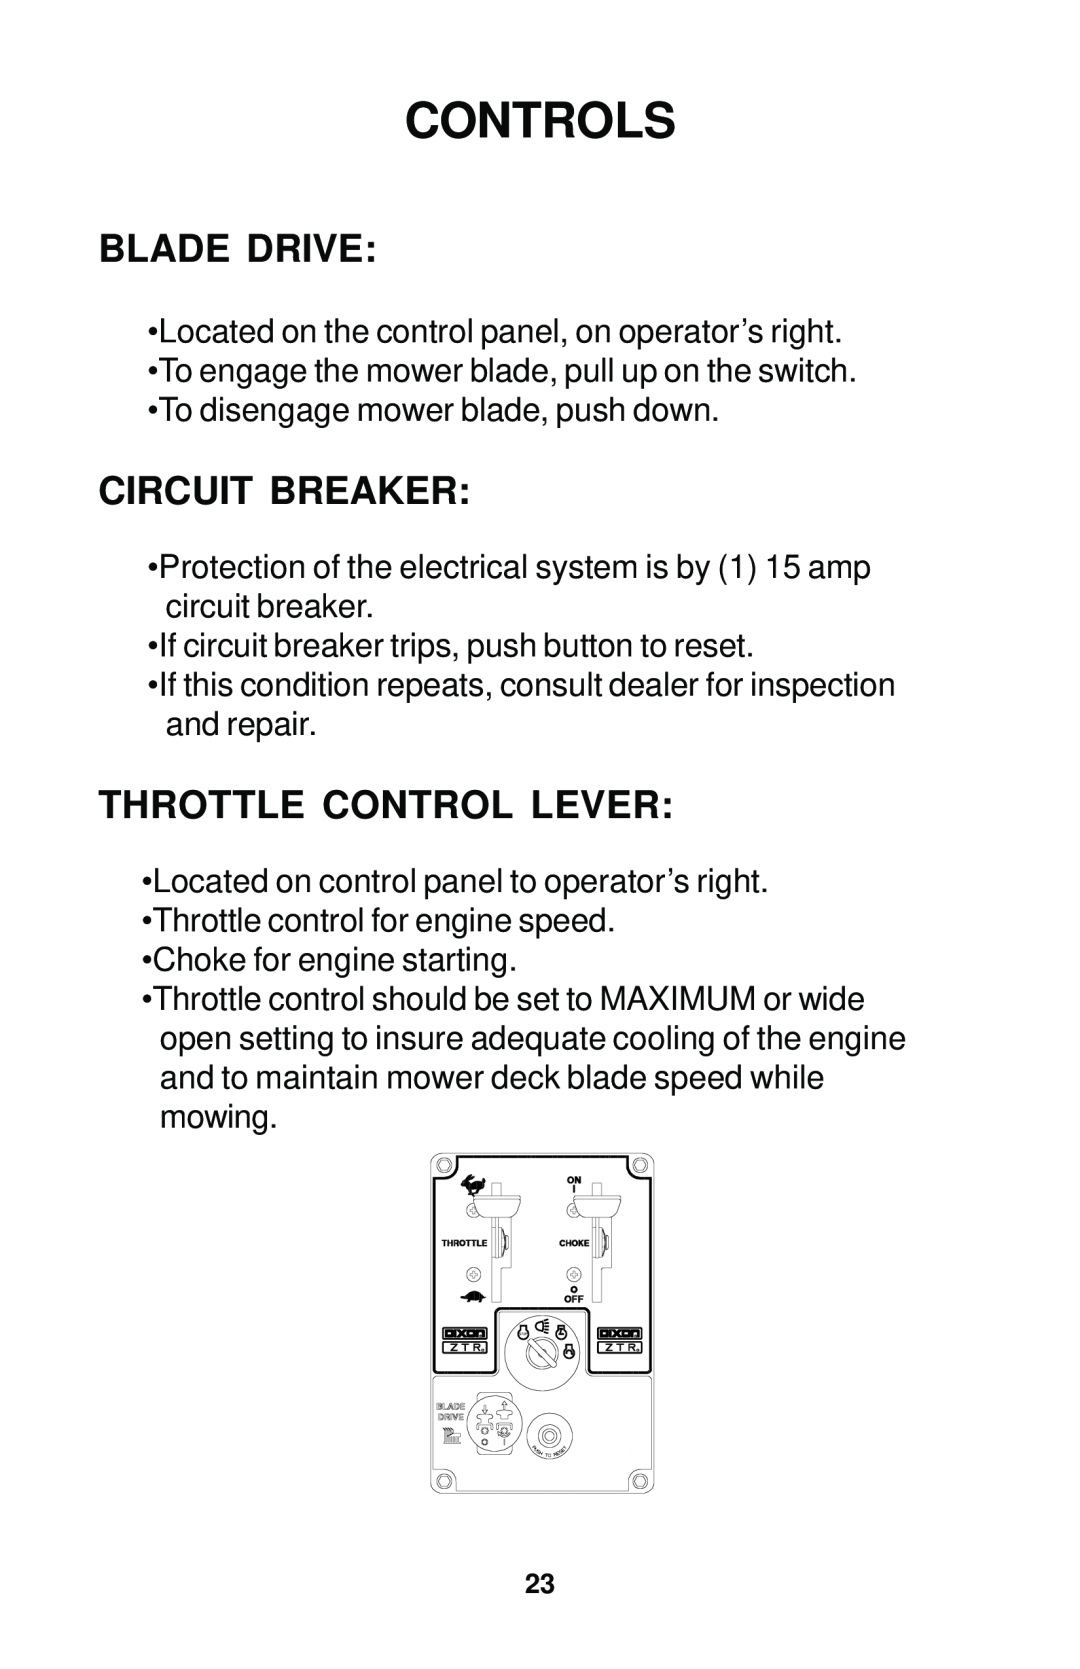 Dixon 17823-0704 manual Blade Drive, Circuit Breaker, Throttle Control Lever, Controls 